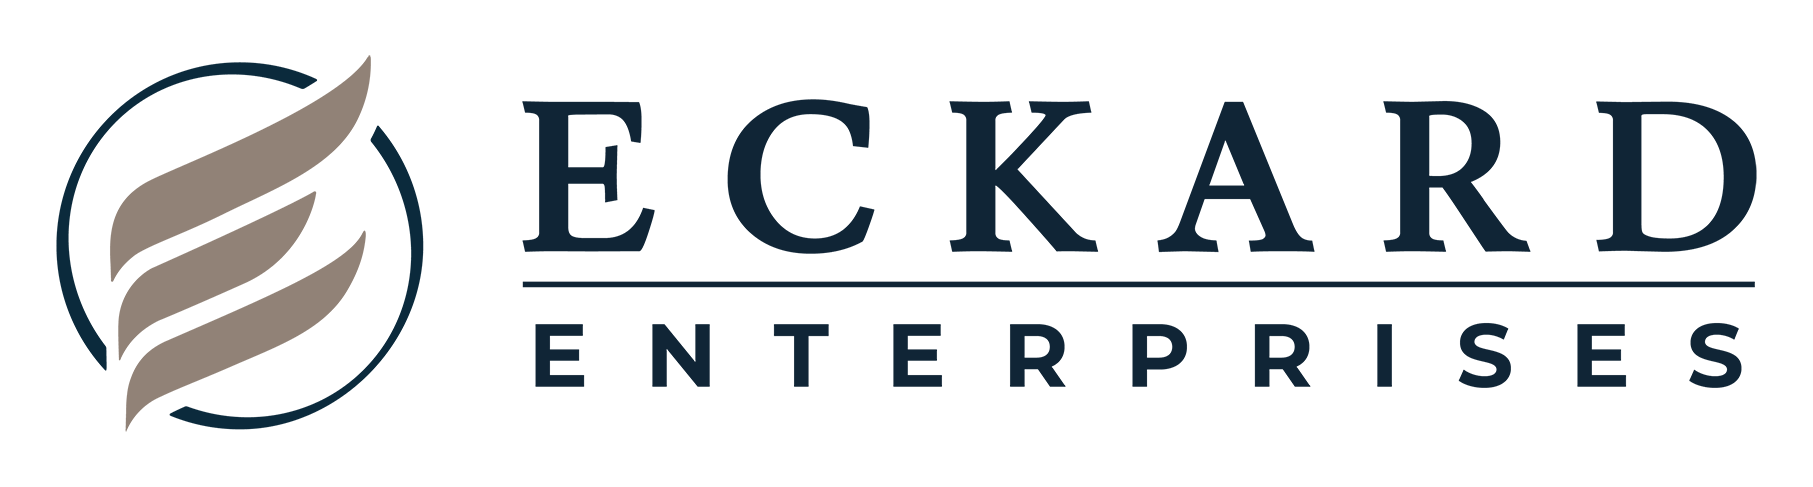 Eckard Enterprises logo